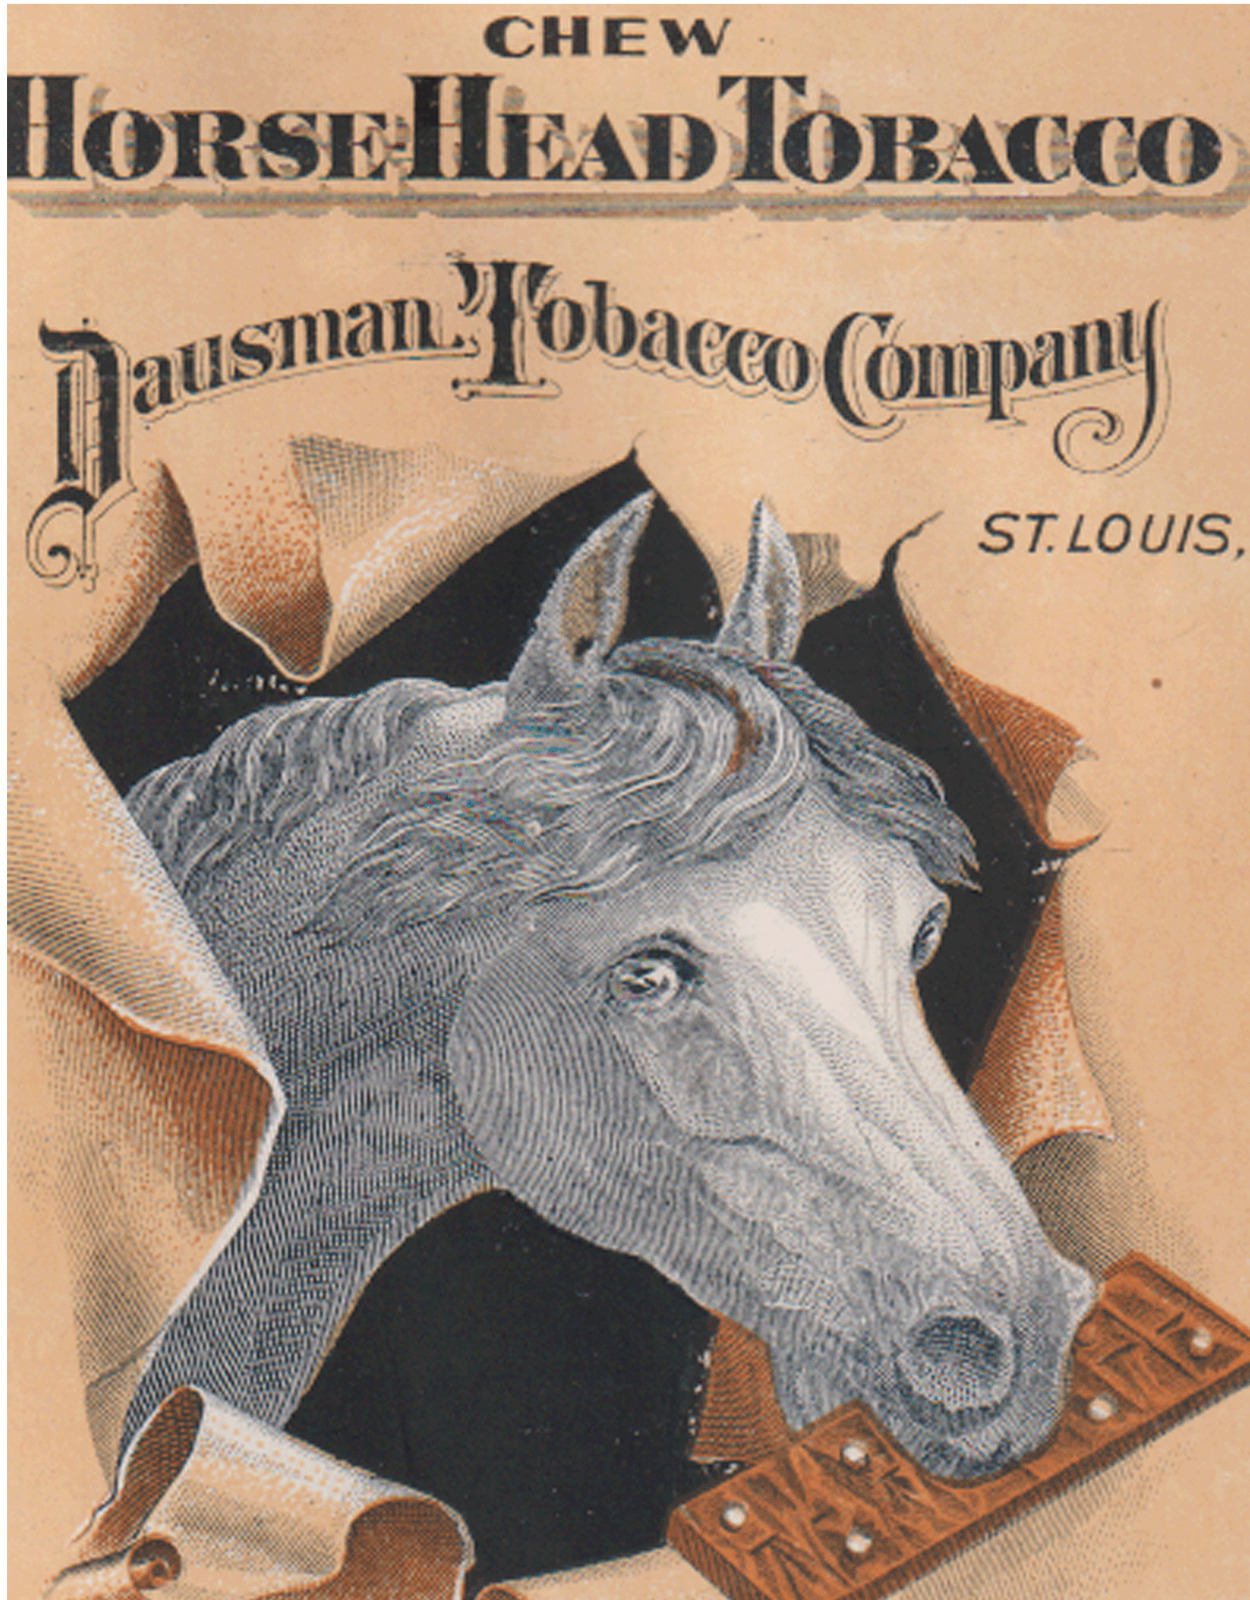 ST LOUIS, MO TRADE CARD, DAUSMAN TOBACCO CO, HORSE HEAD CHEWING TOBACCO   X1065